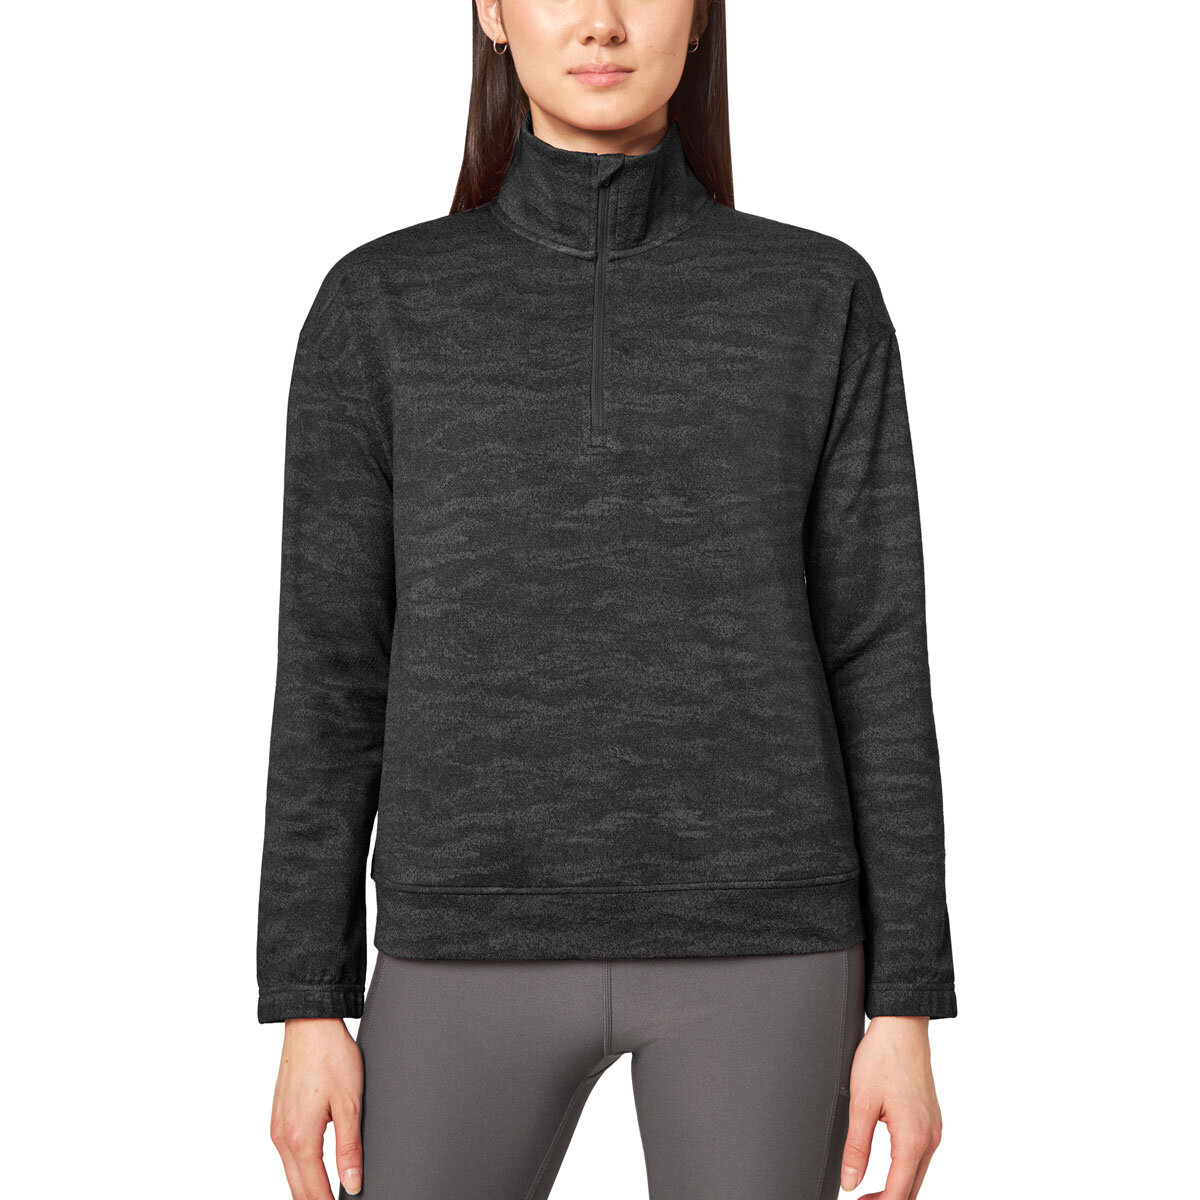 Mondetta Jacquard Quarter Zip Sweatshirt in Black | Costc